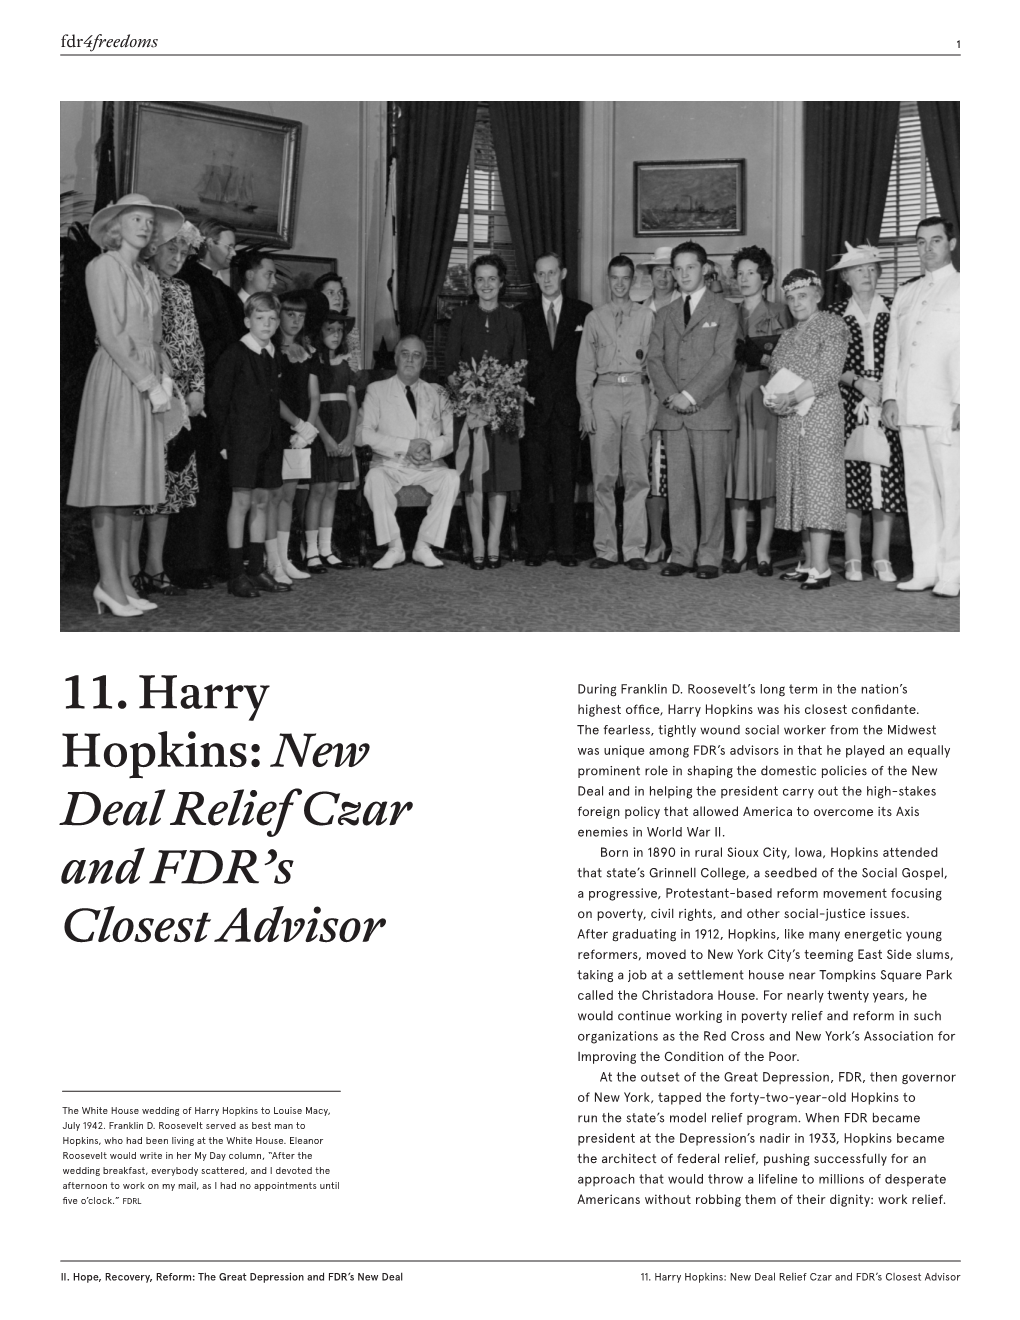 11. Harry Hopkins: New Deal Relief Czar and FDR's Closest Advisor